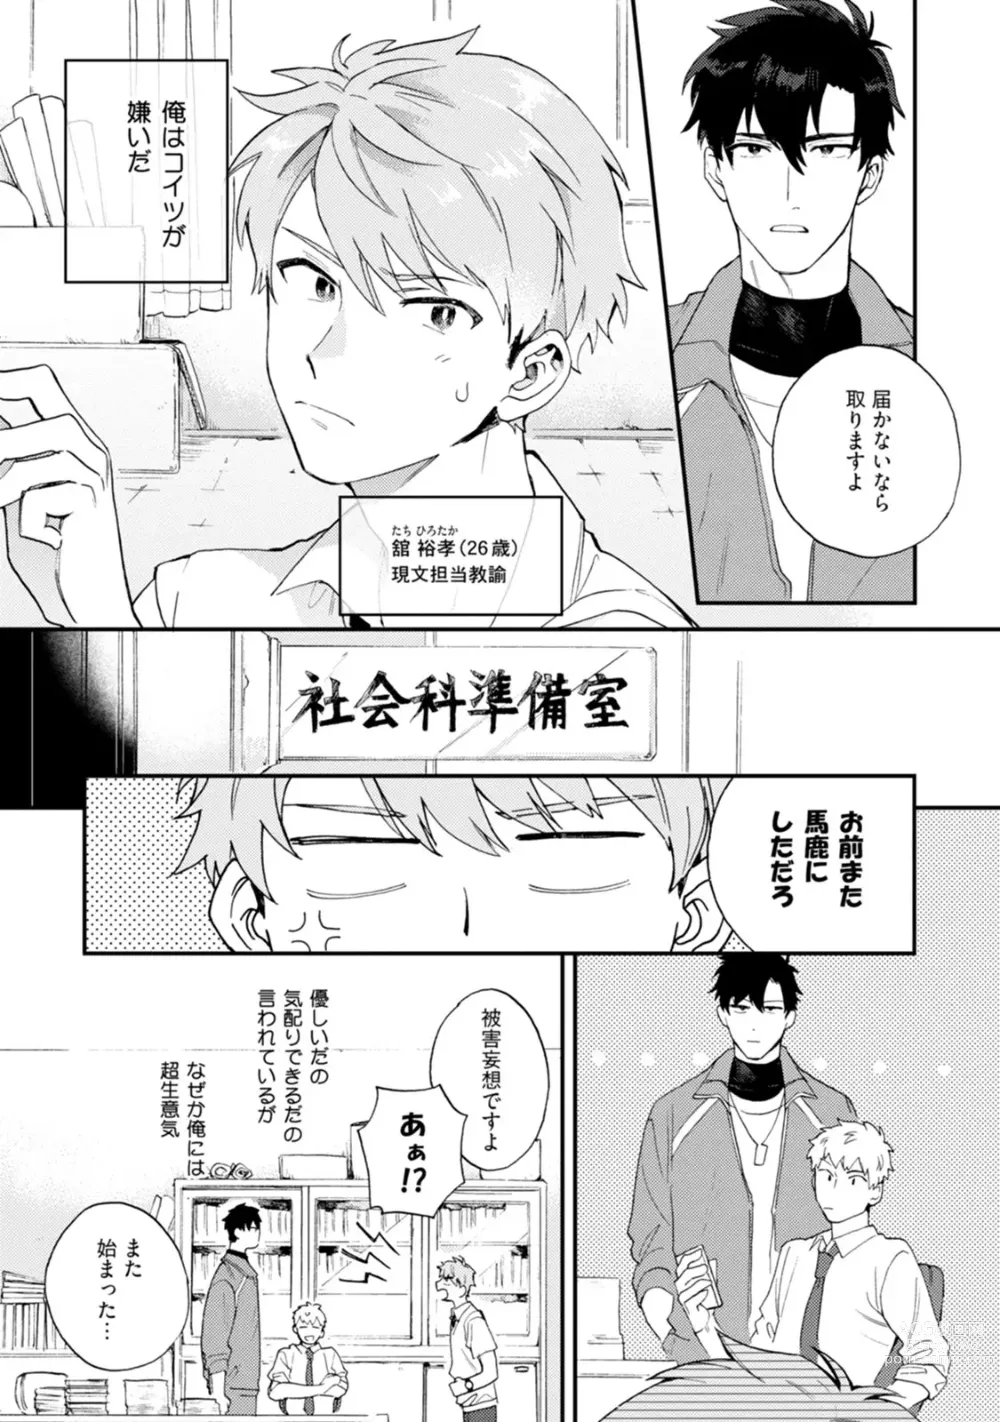 Page 6 of manga Unhappy Hour Night